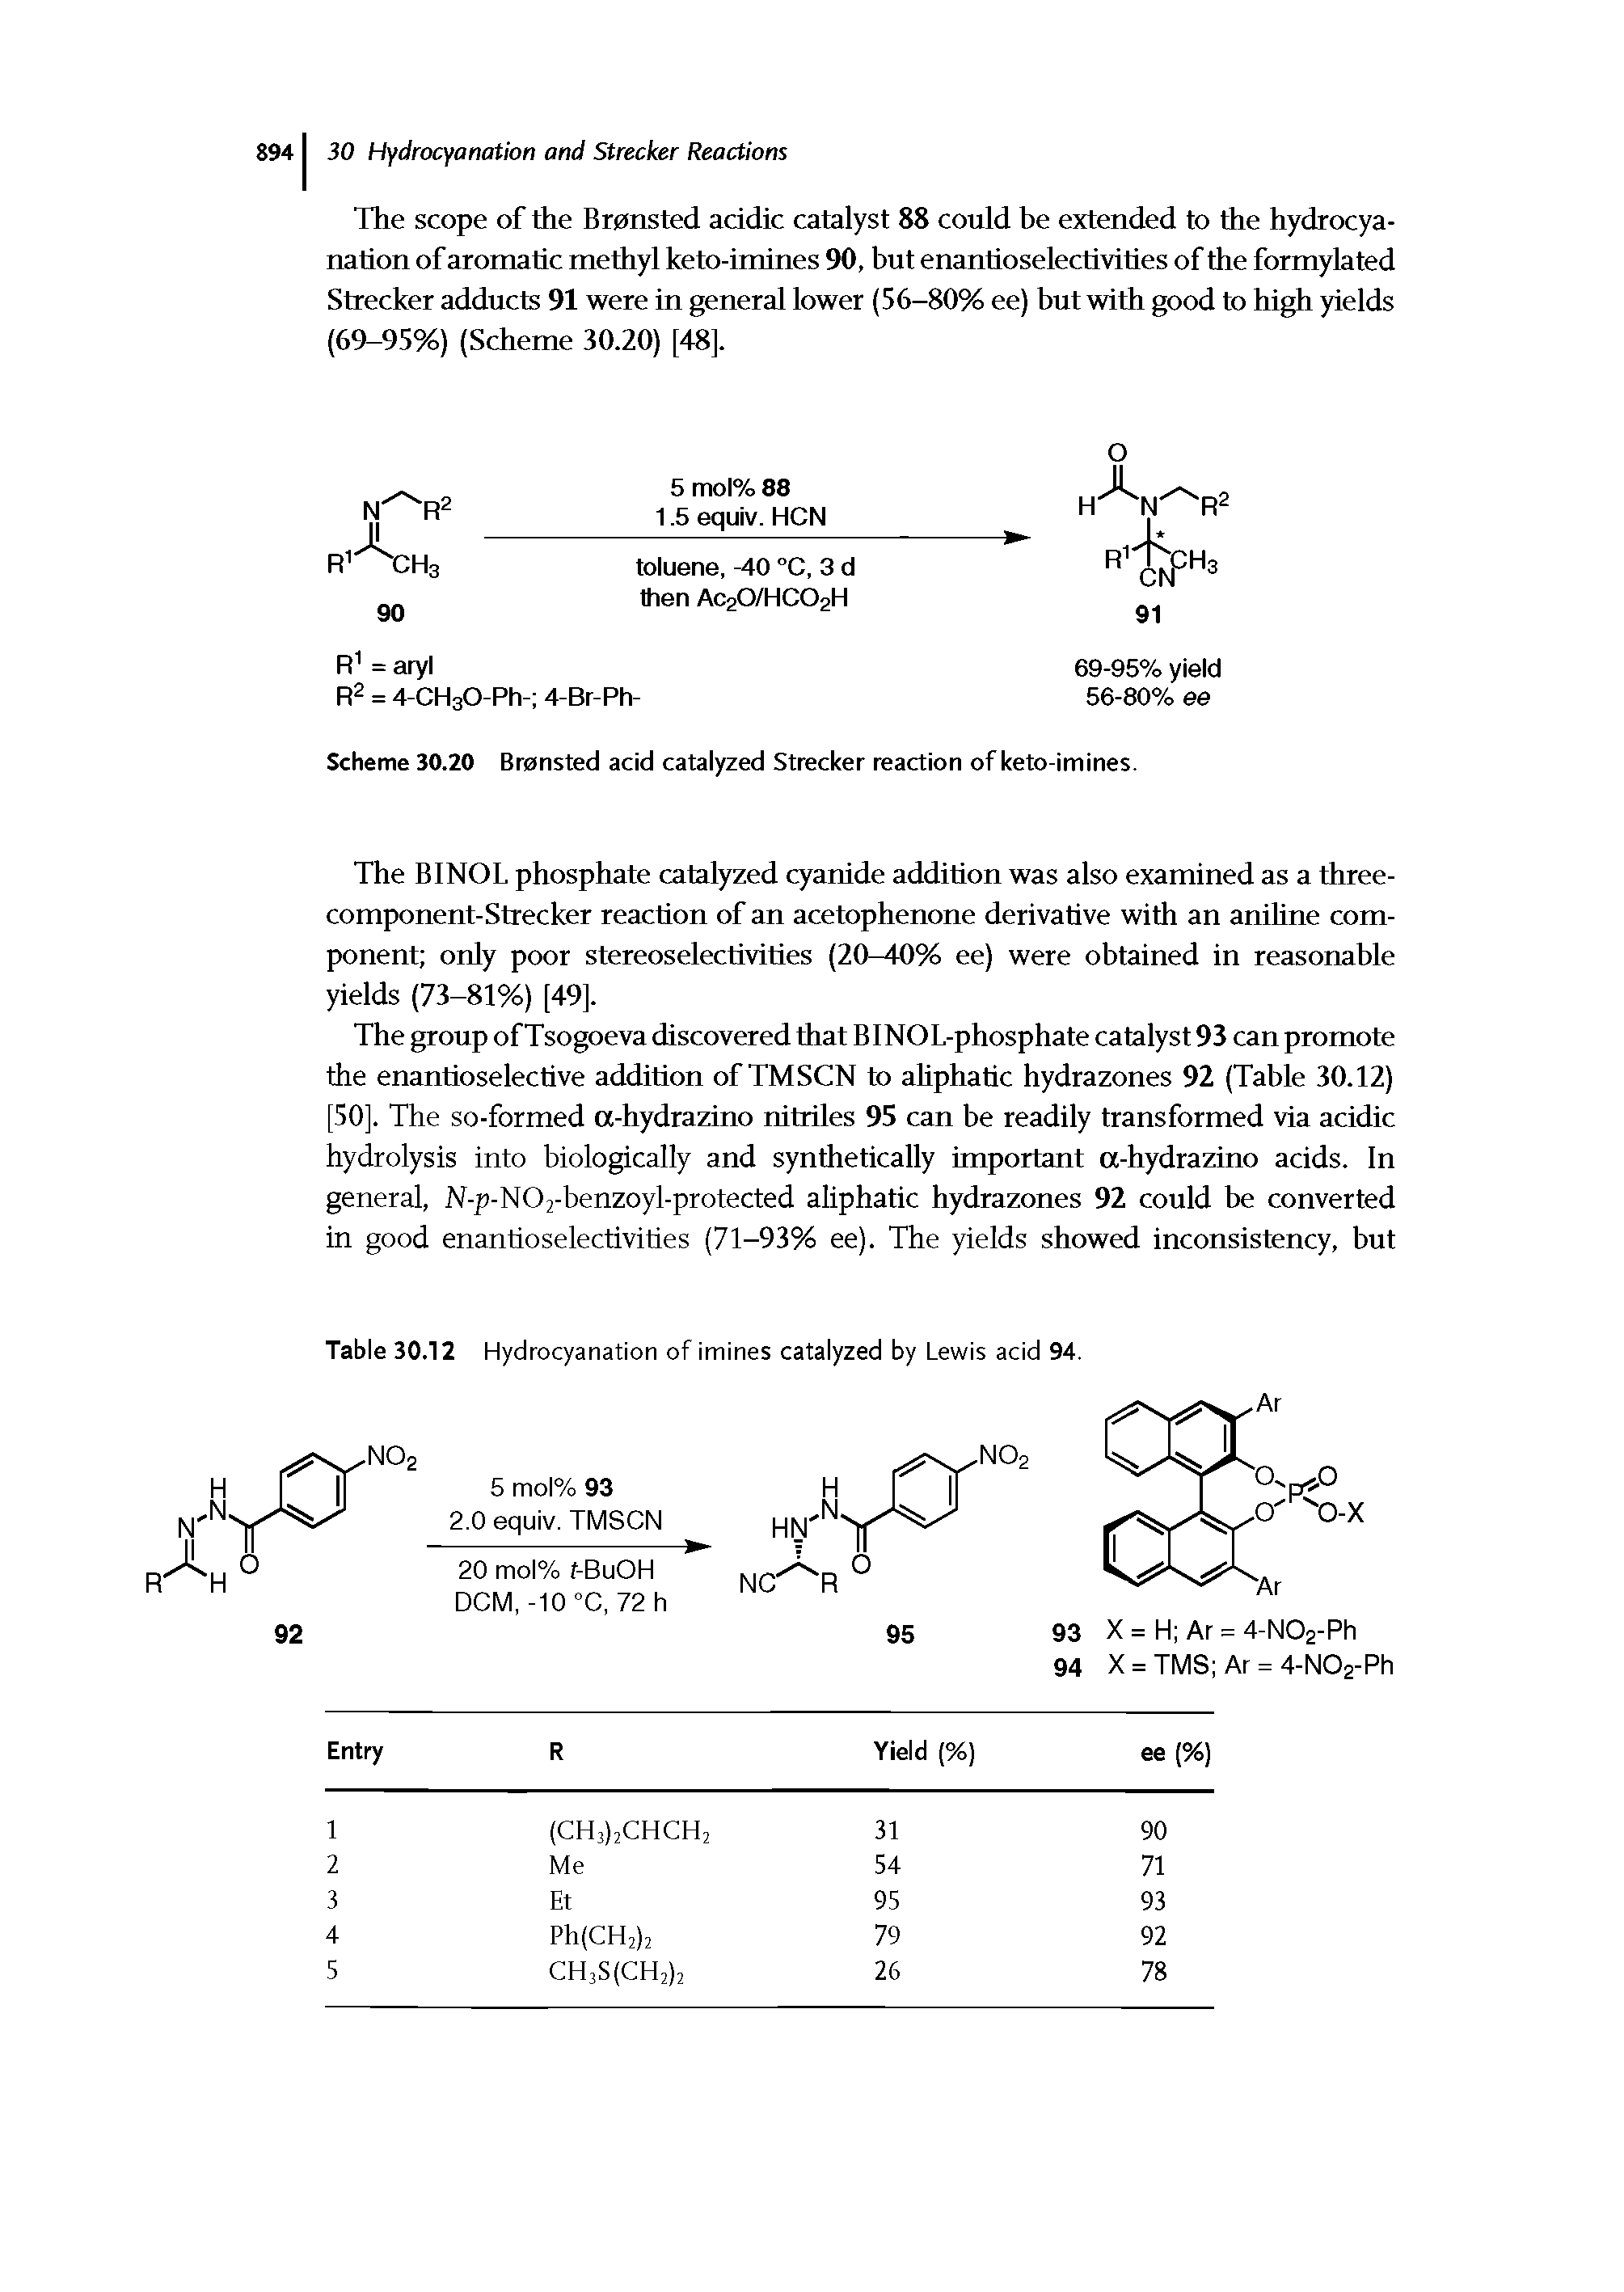 Scheme 30.20 Bronsted acid catalyzed Strecker reaction of keto-imines.